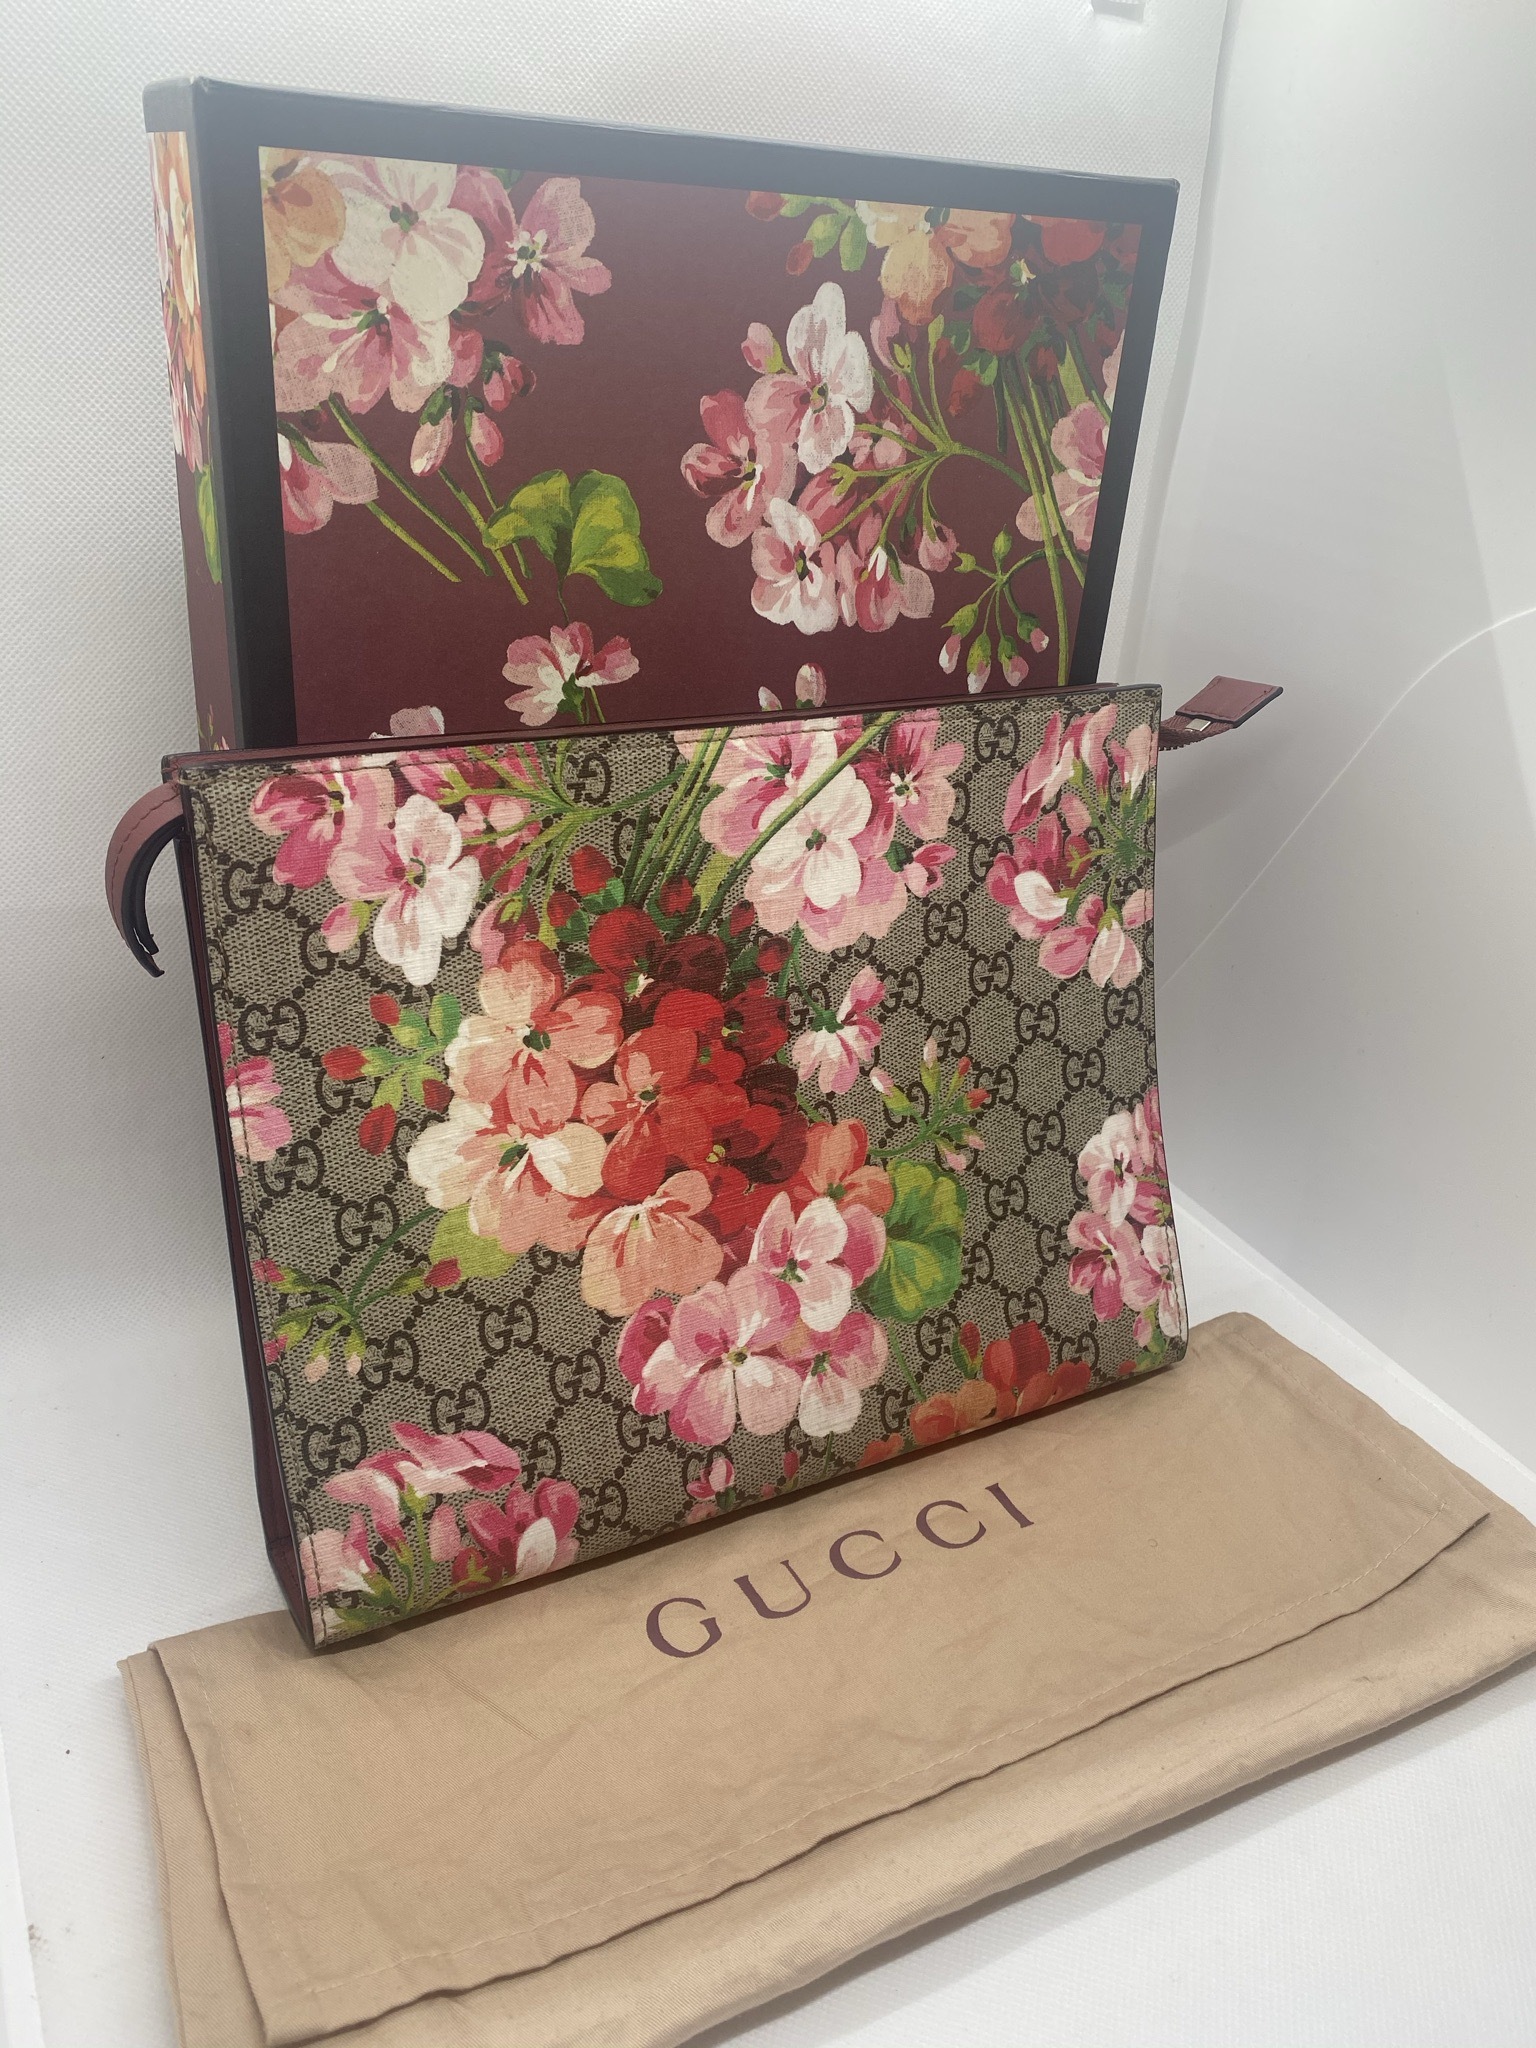 Gucci Bloom Large Clutch Bag